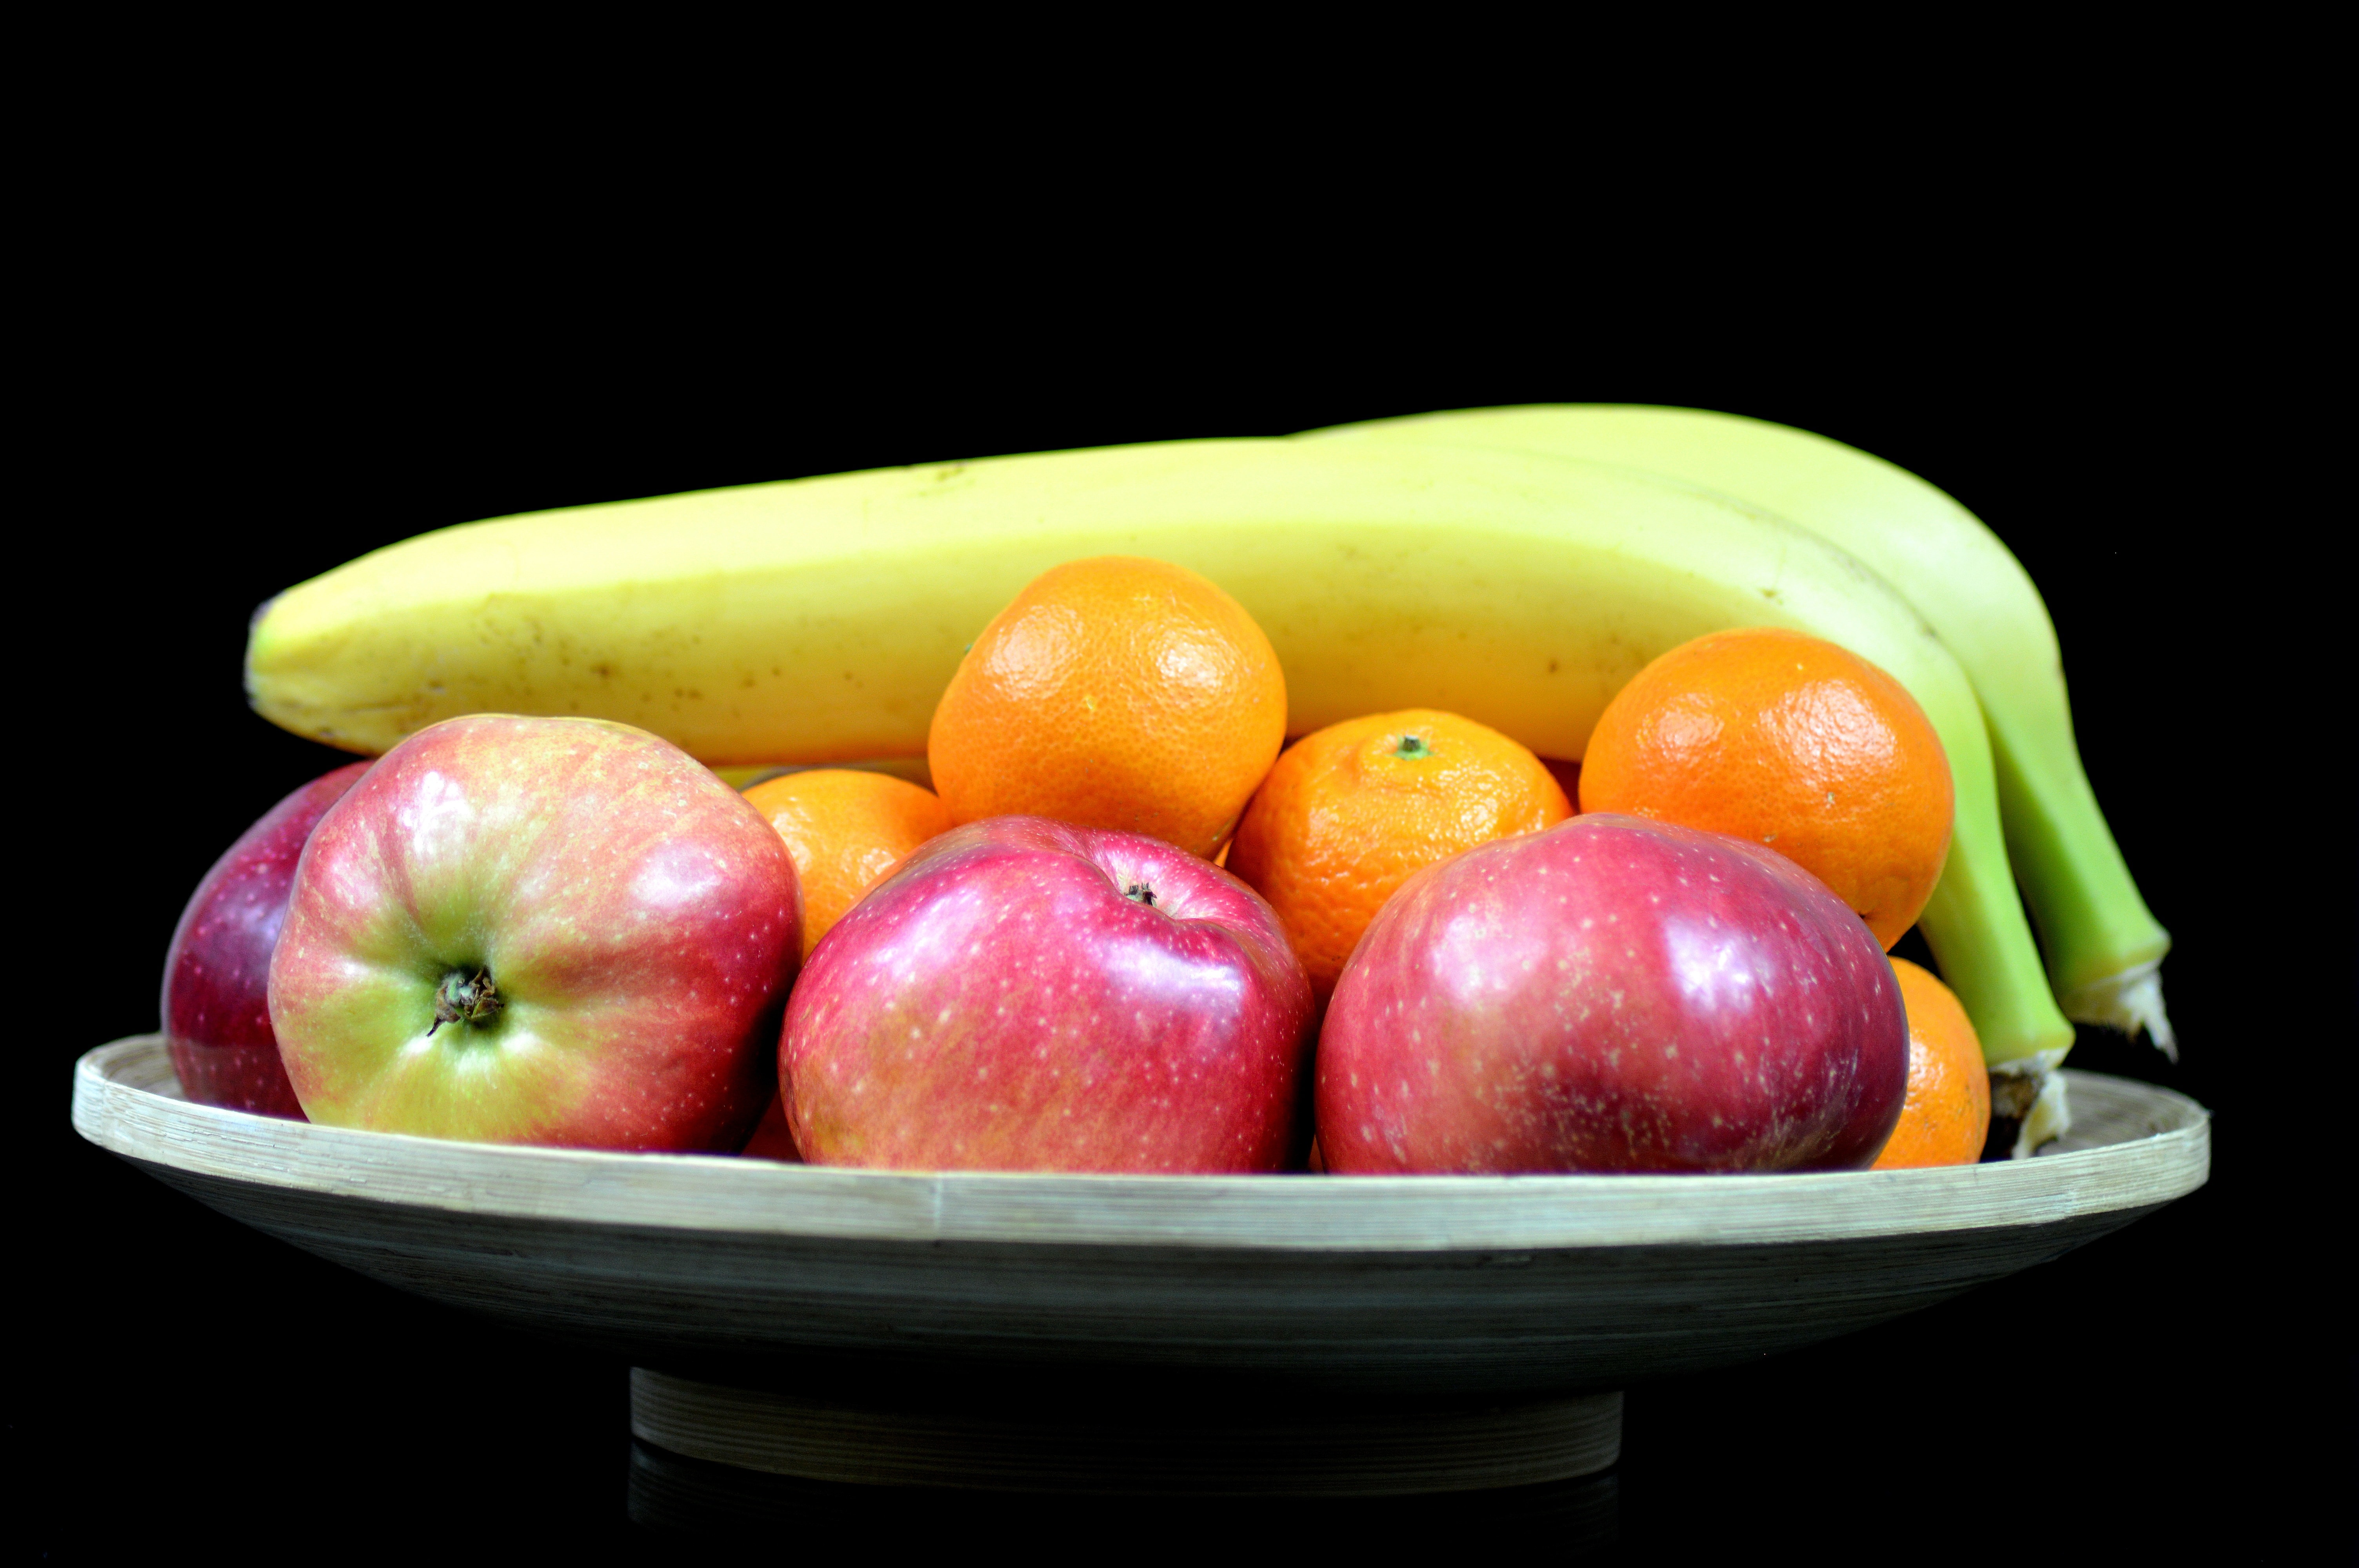 Ripe Apple Orange Fruit And Unripe Bananas Free Image Peakpx